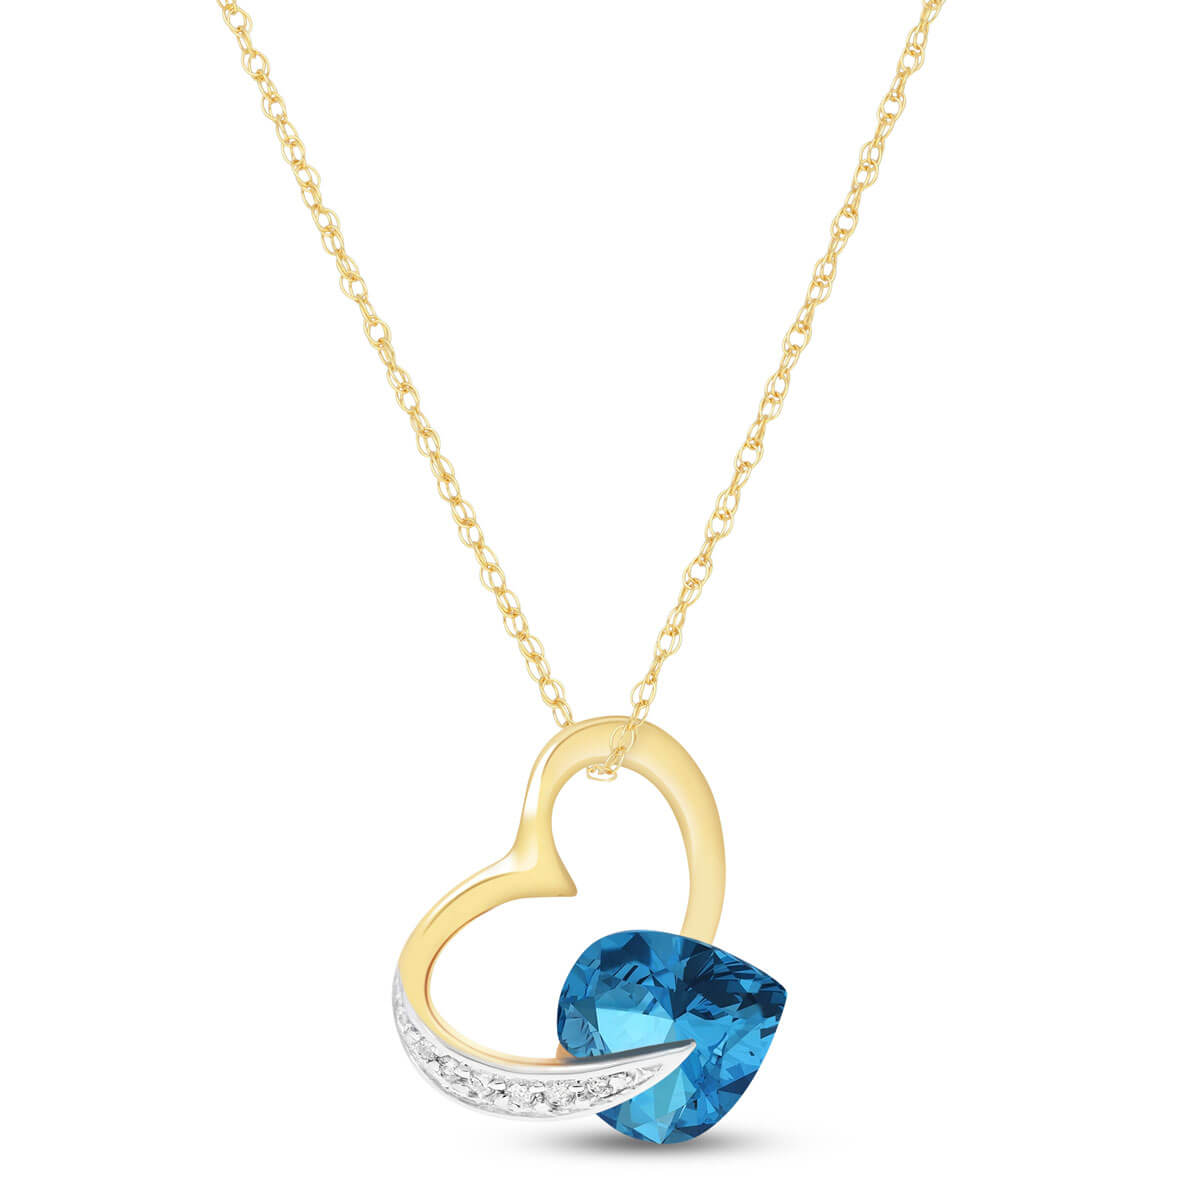 Blue Topaz & Diamond Heart Pendant Necklace in 9ct Gold